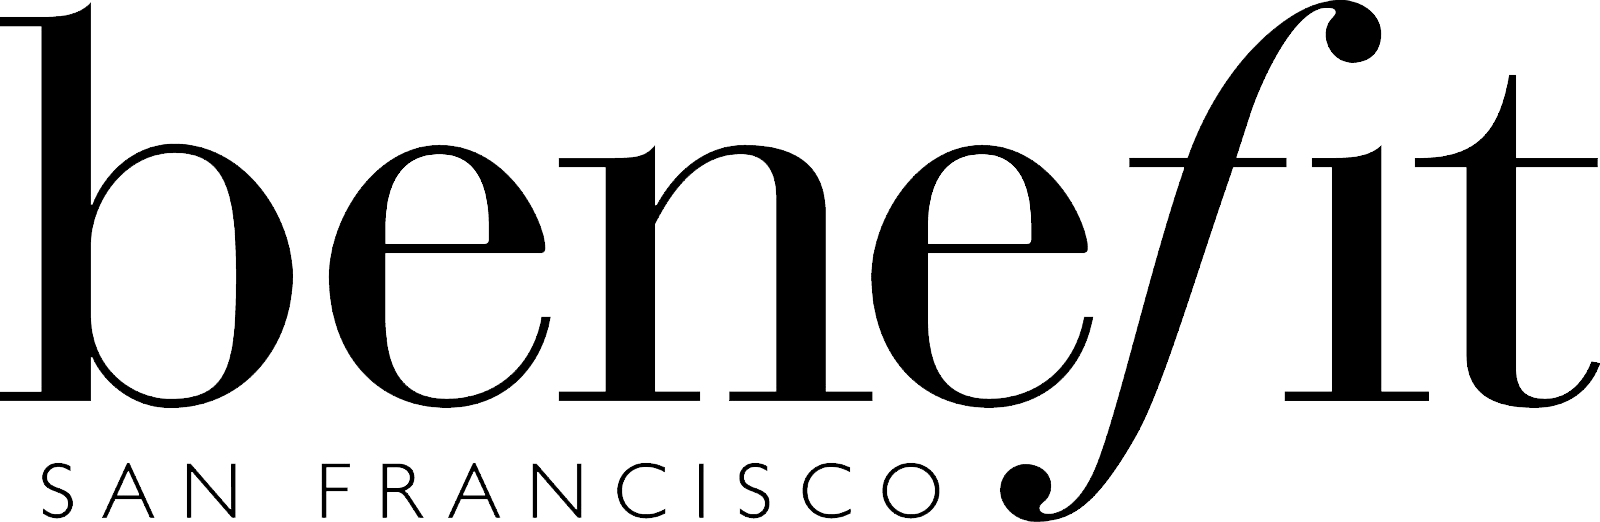 Benefit-logo - Benefit Cosmetics Logo Png (1600x522)